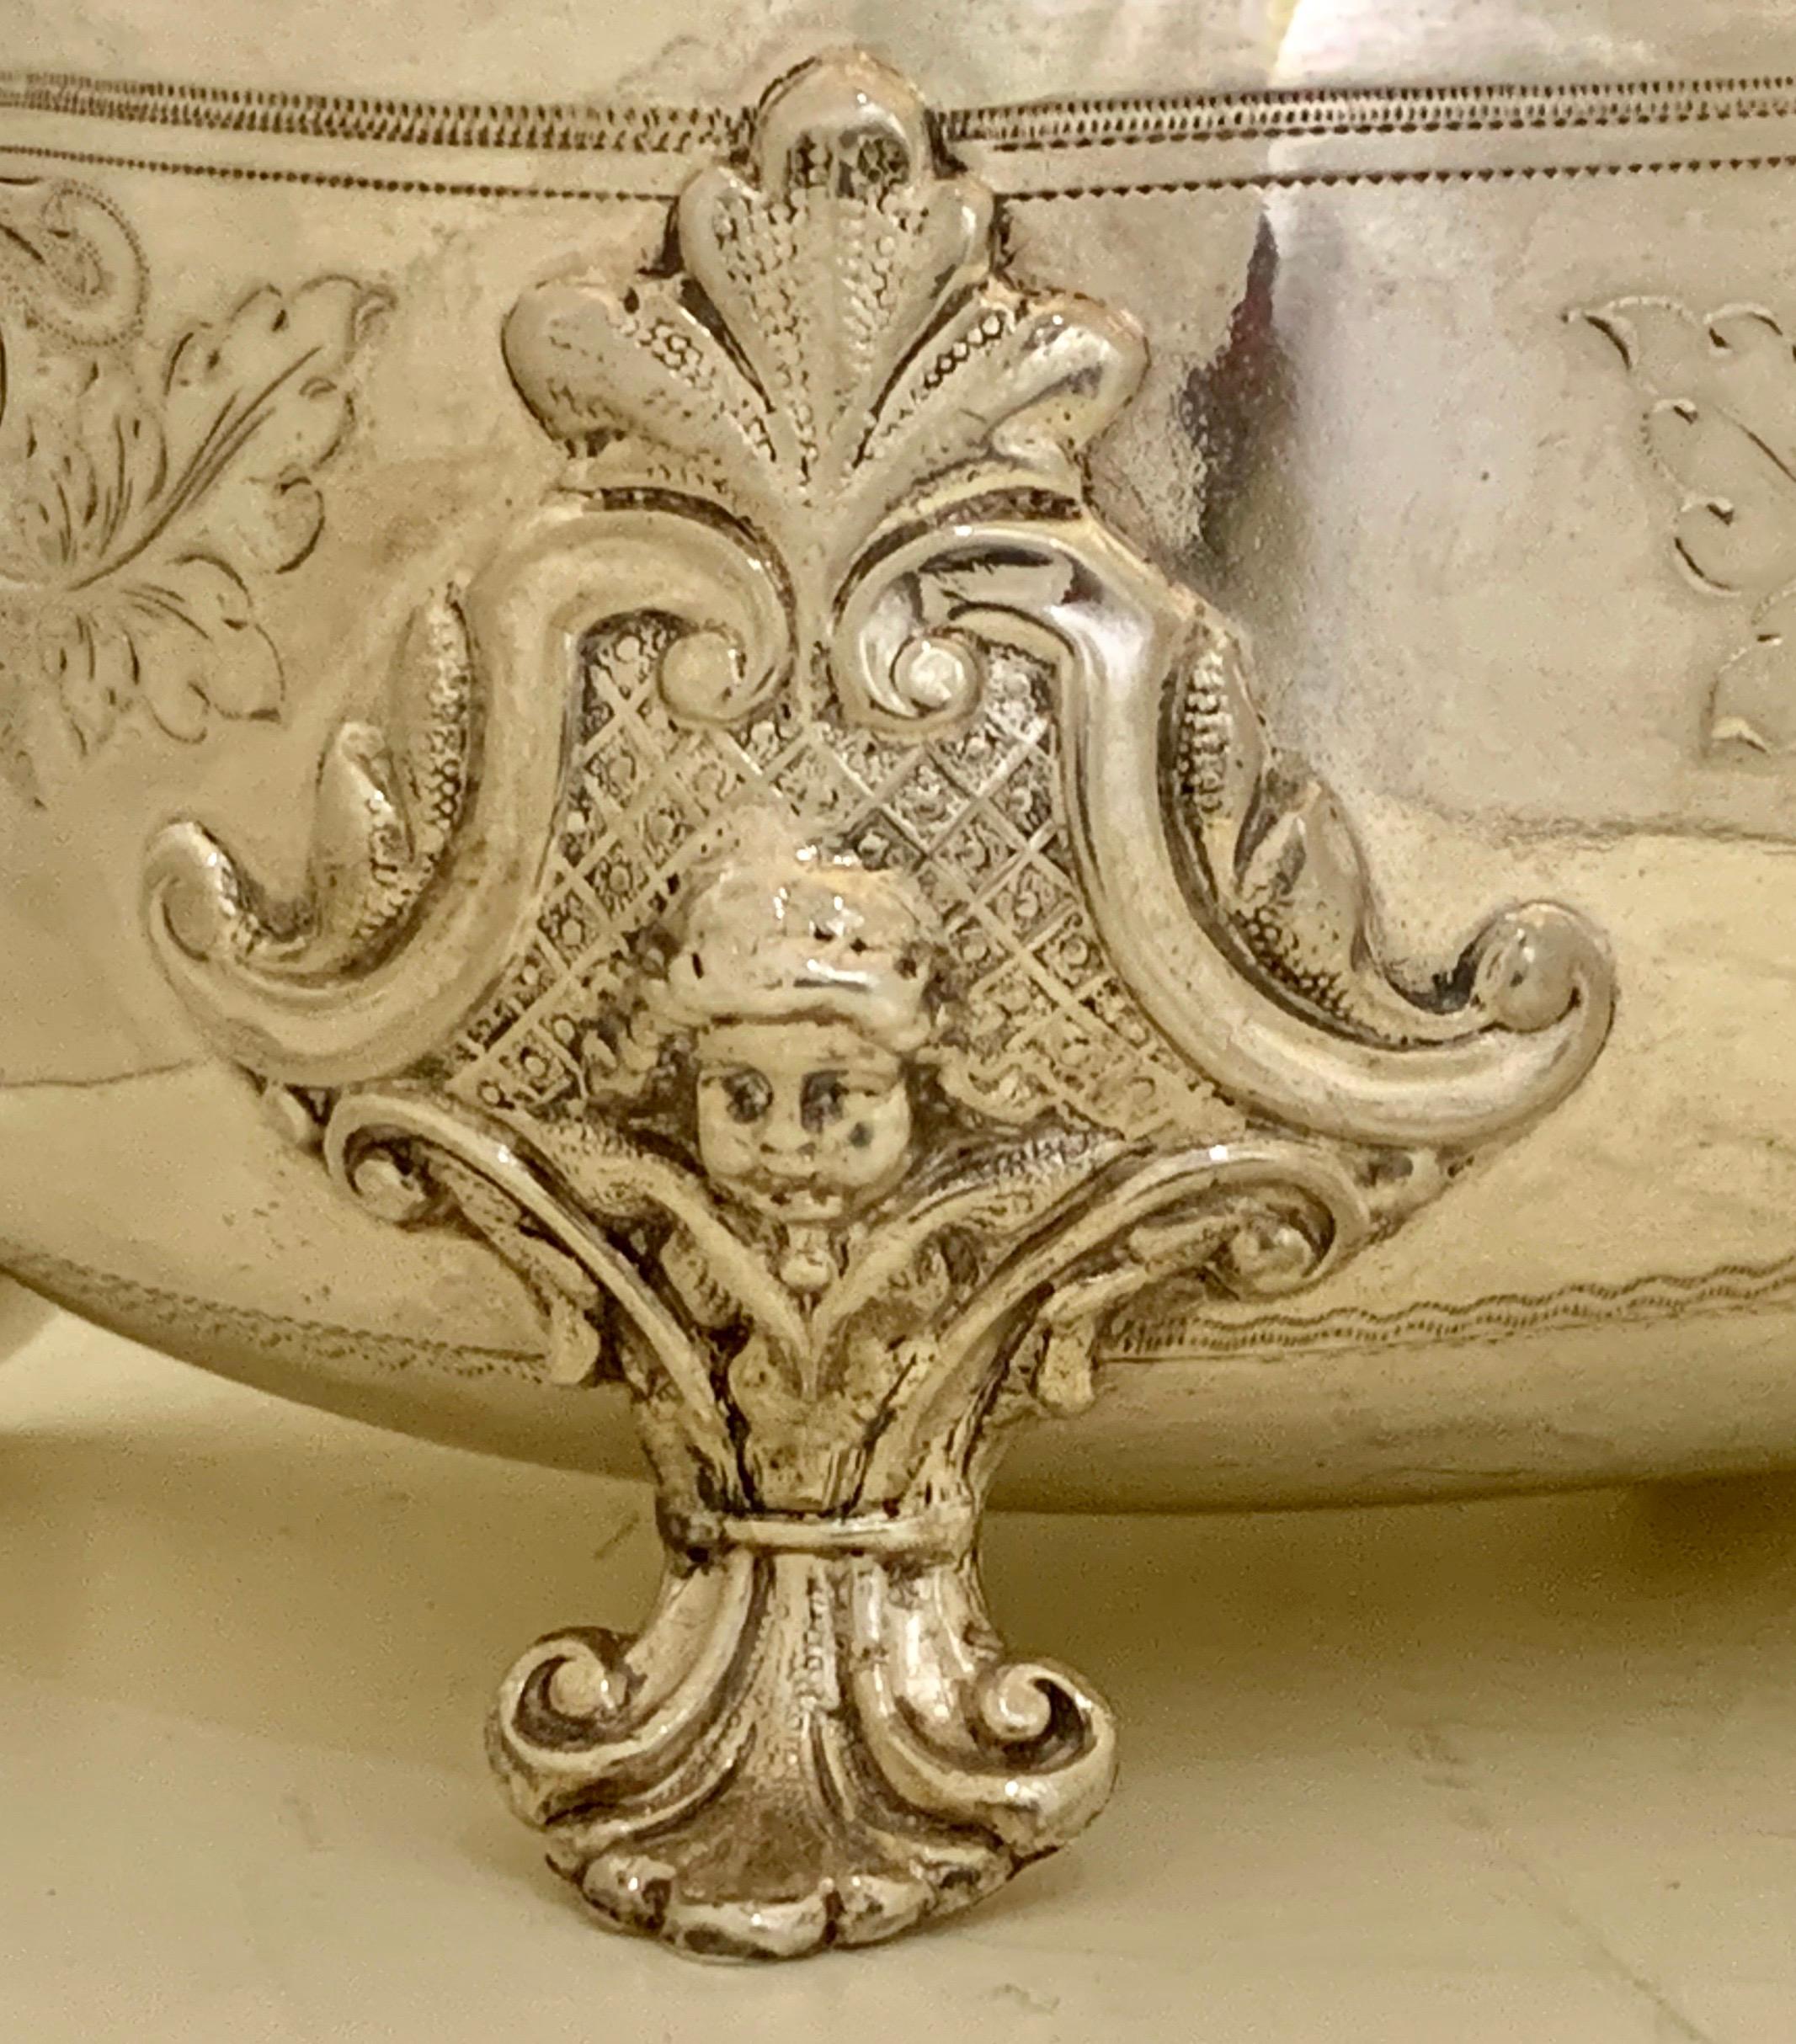 Late 19th Century Antique French Silver Sugar Box / Casket Ornate